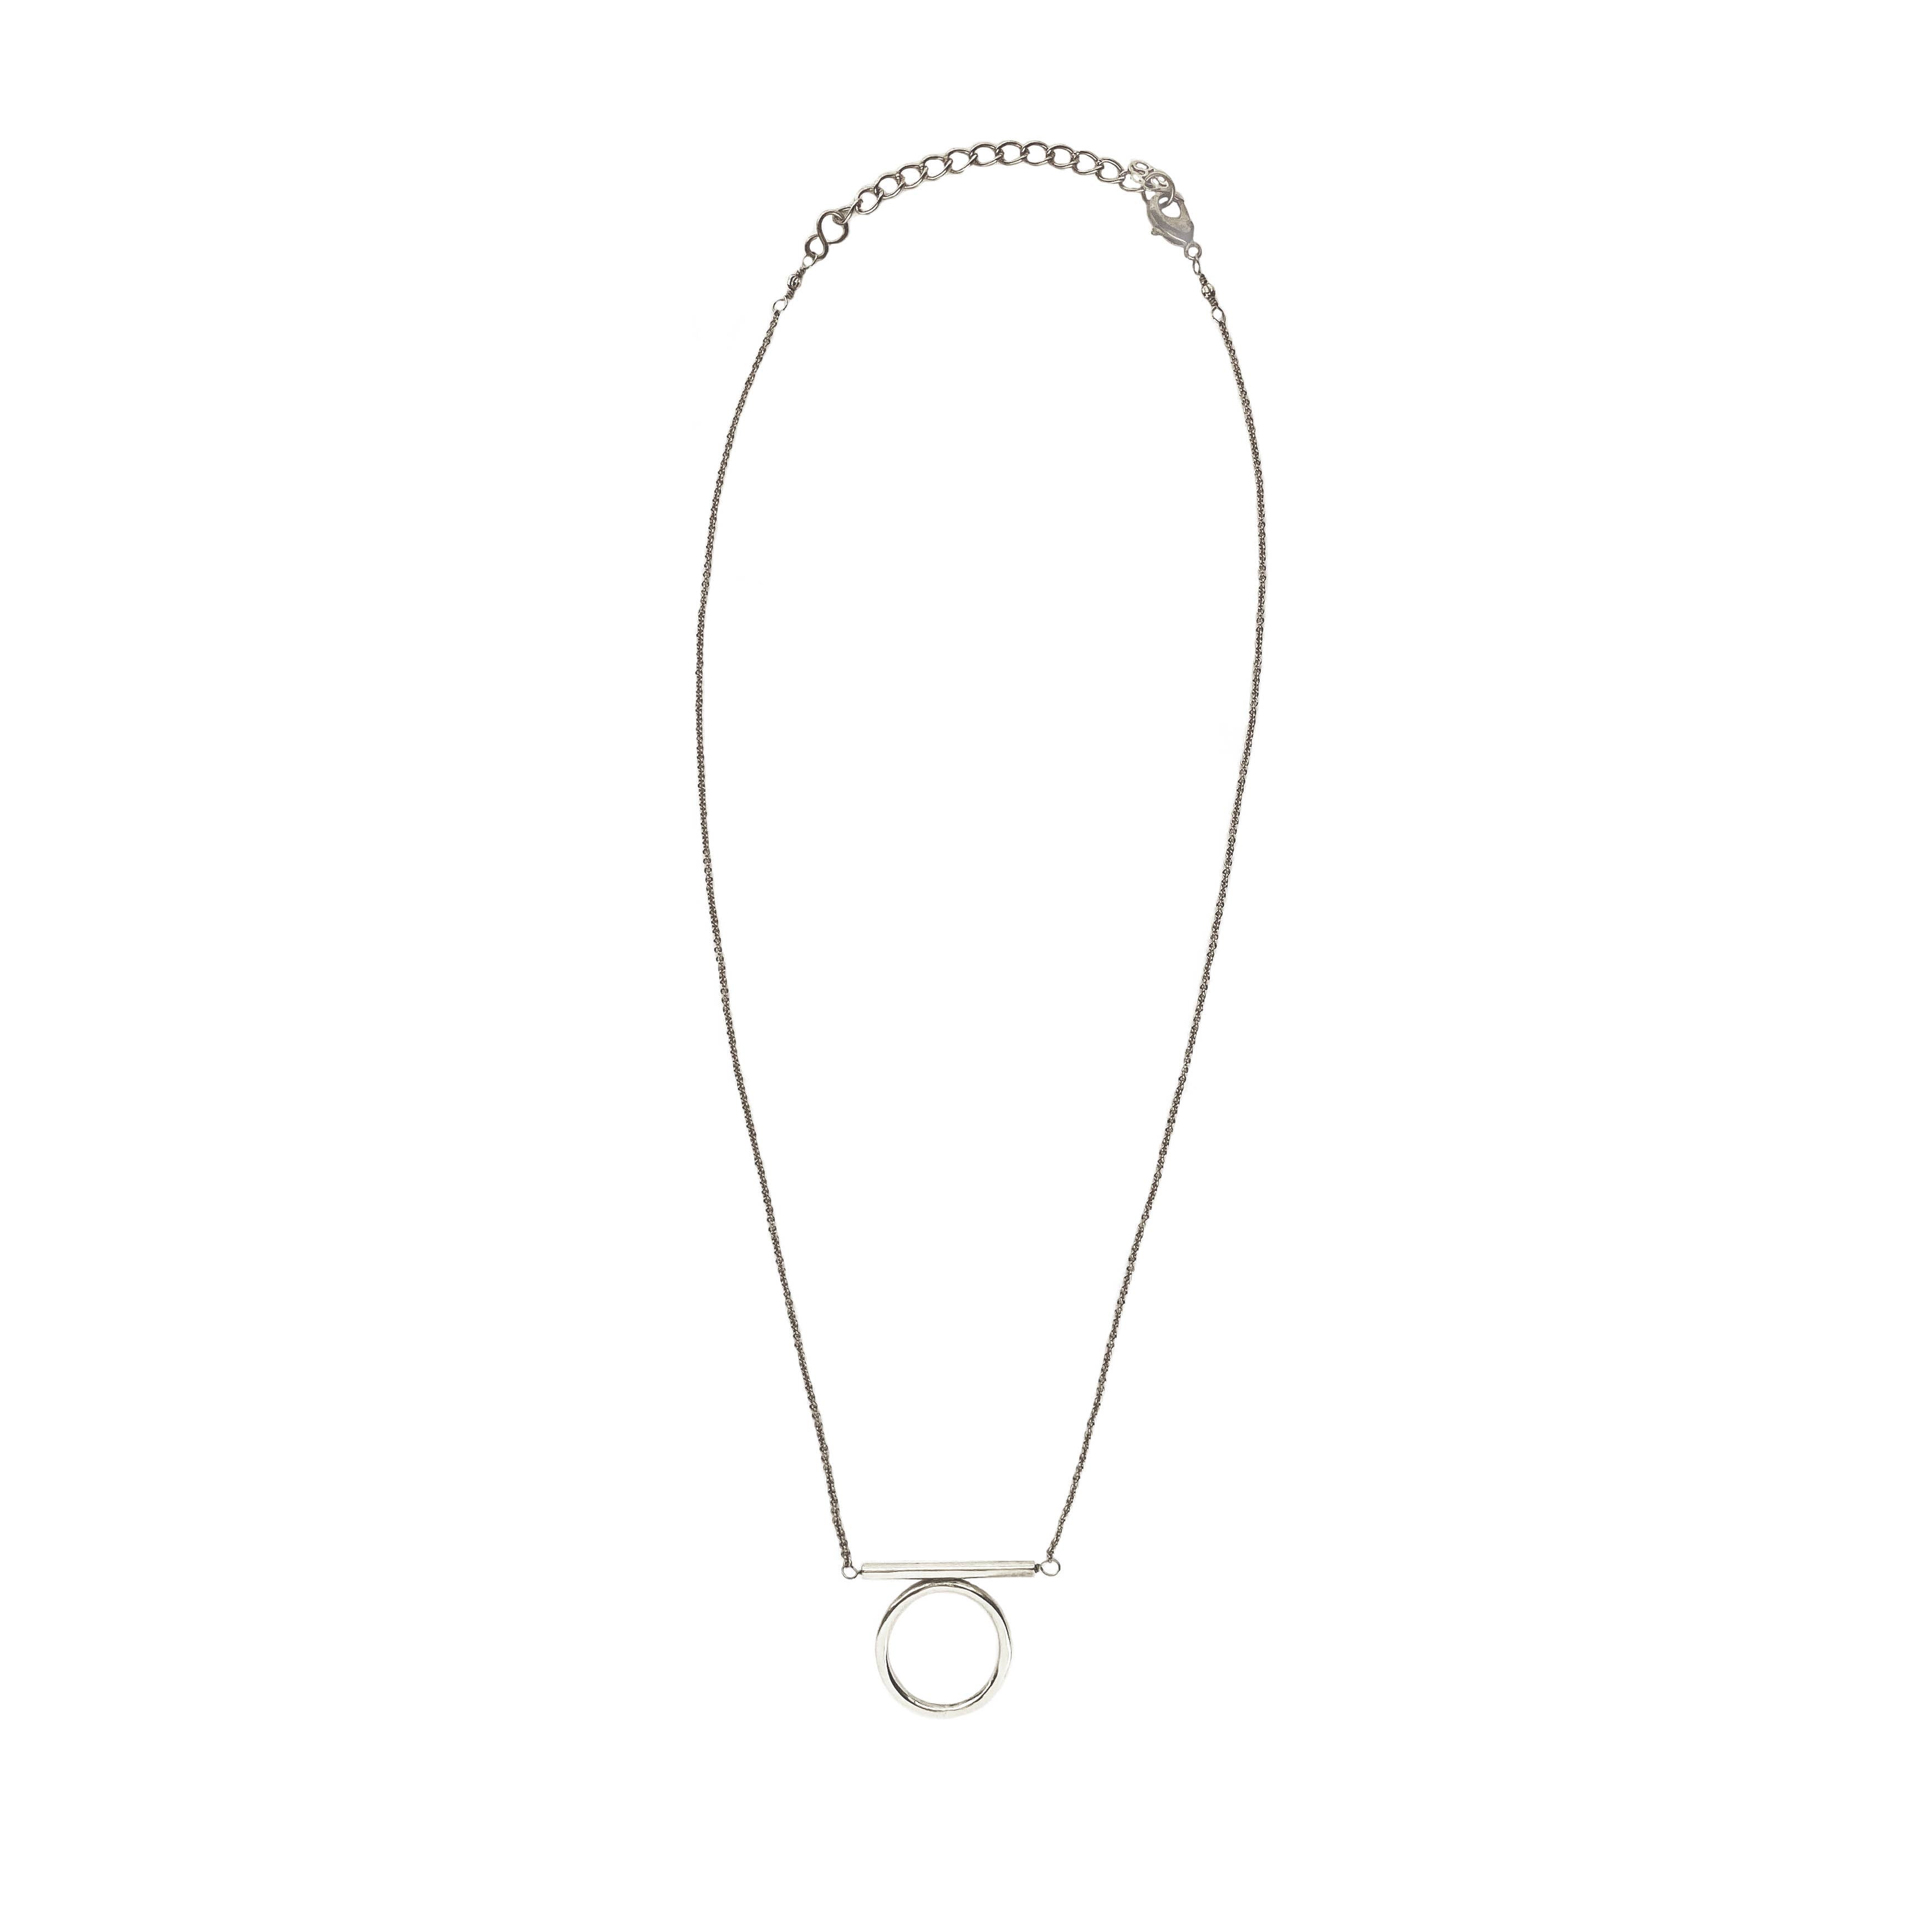 Purpose Jewelry - Moxie Necklace